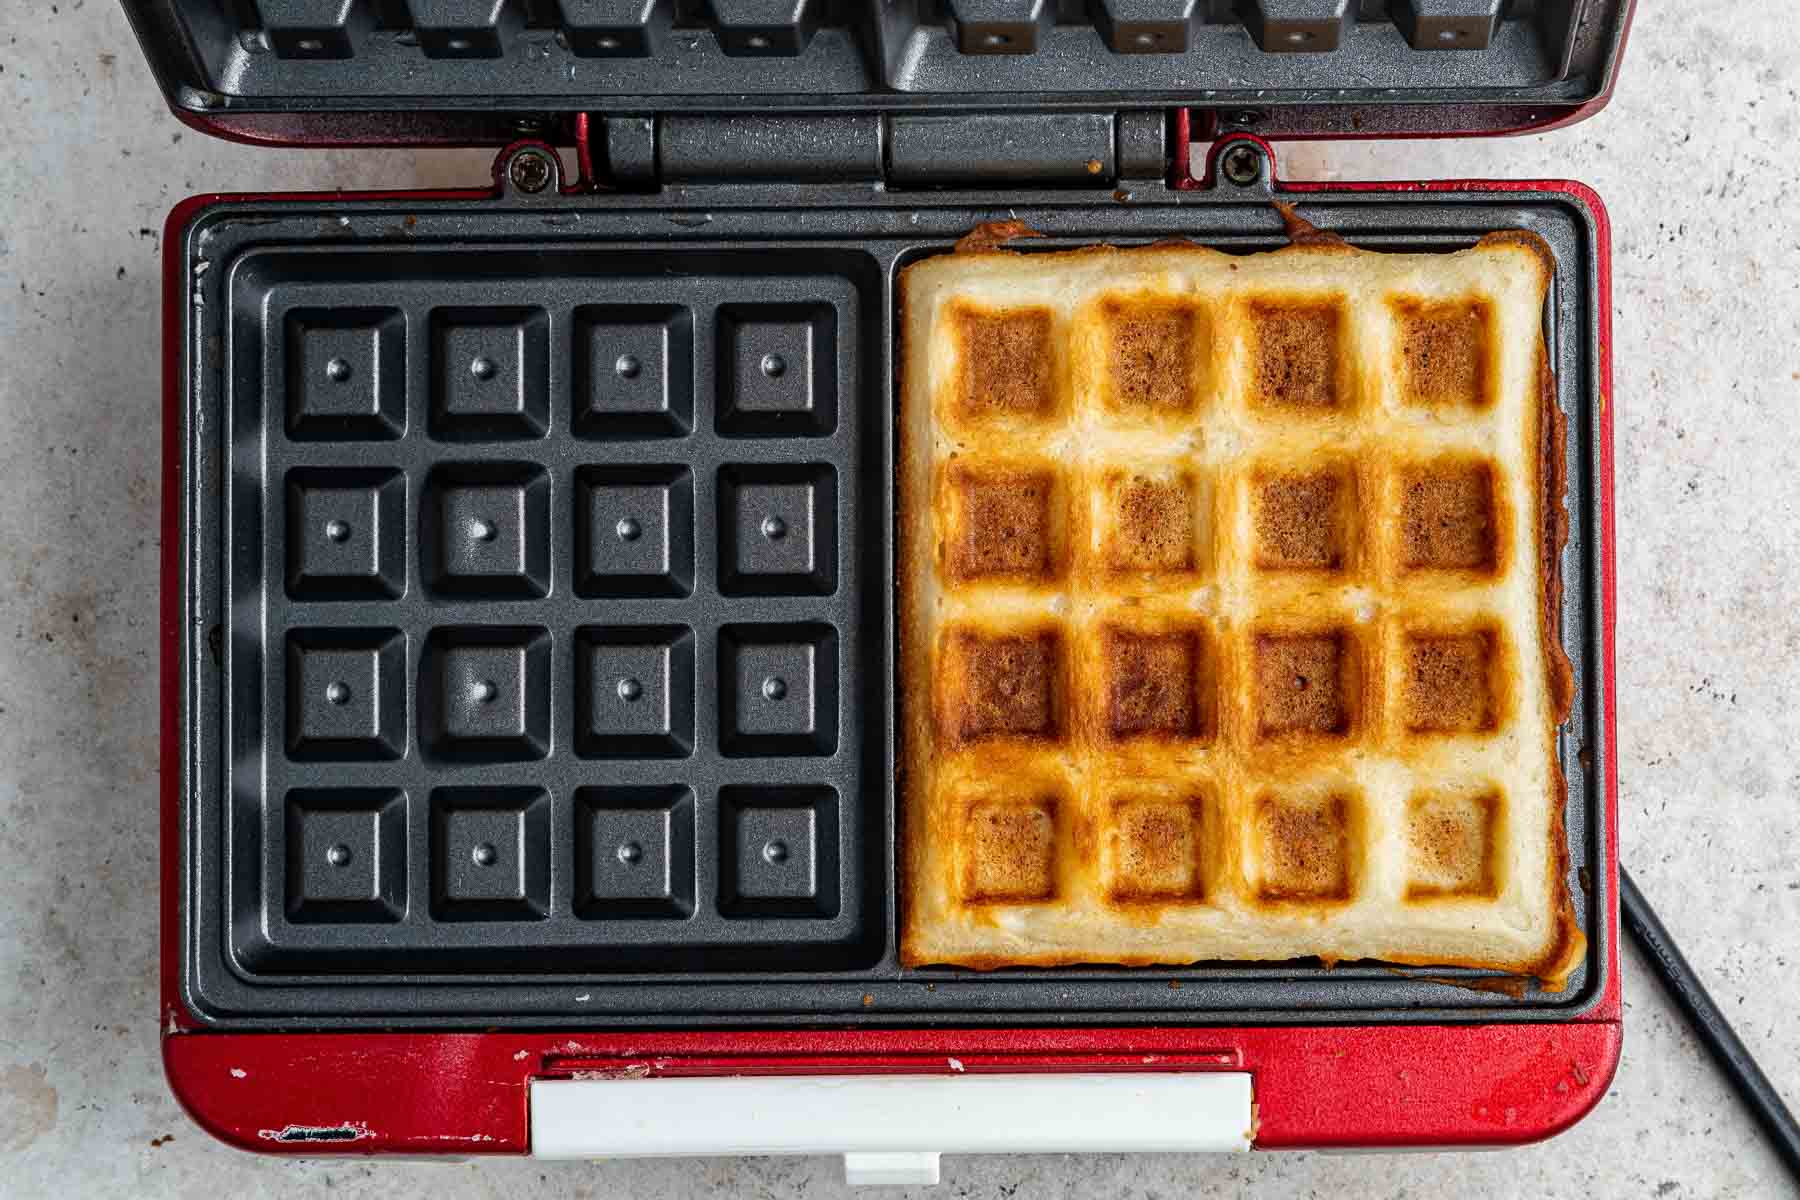 A single waffle freshly cooked on a waffle iron.